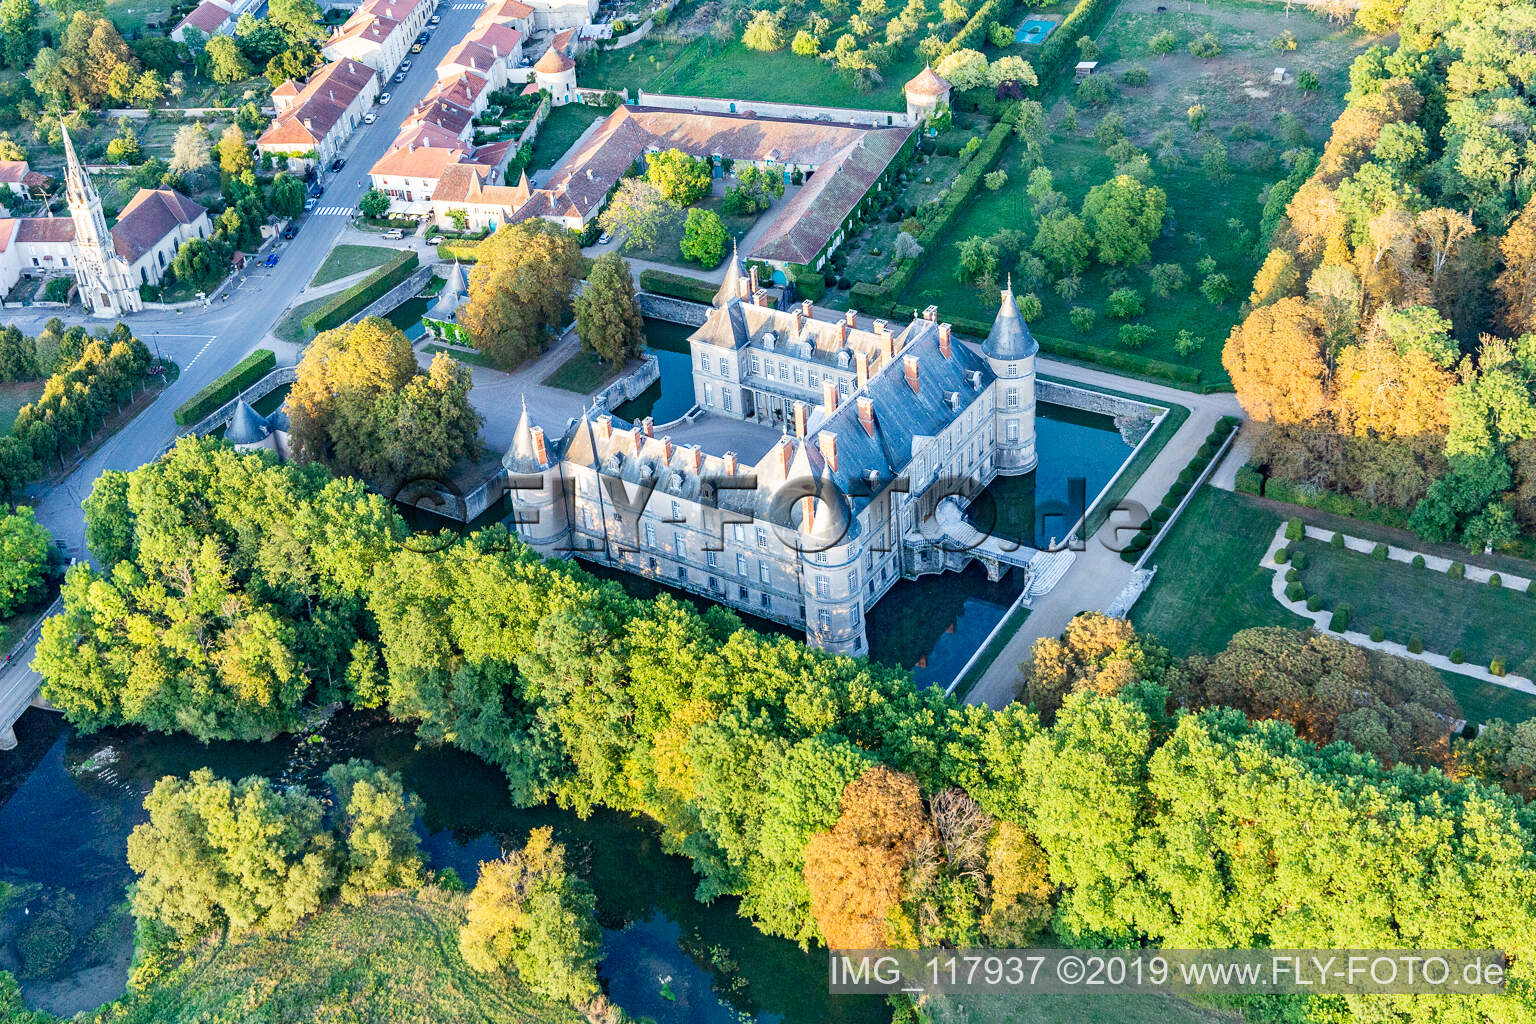 Luftaufnahme von Chateau de Haroué im Bundesland Meurthe-et-Moselle, Frankreich